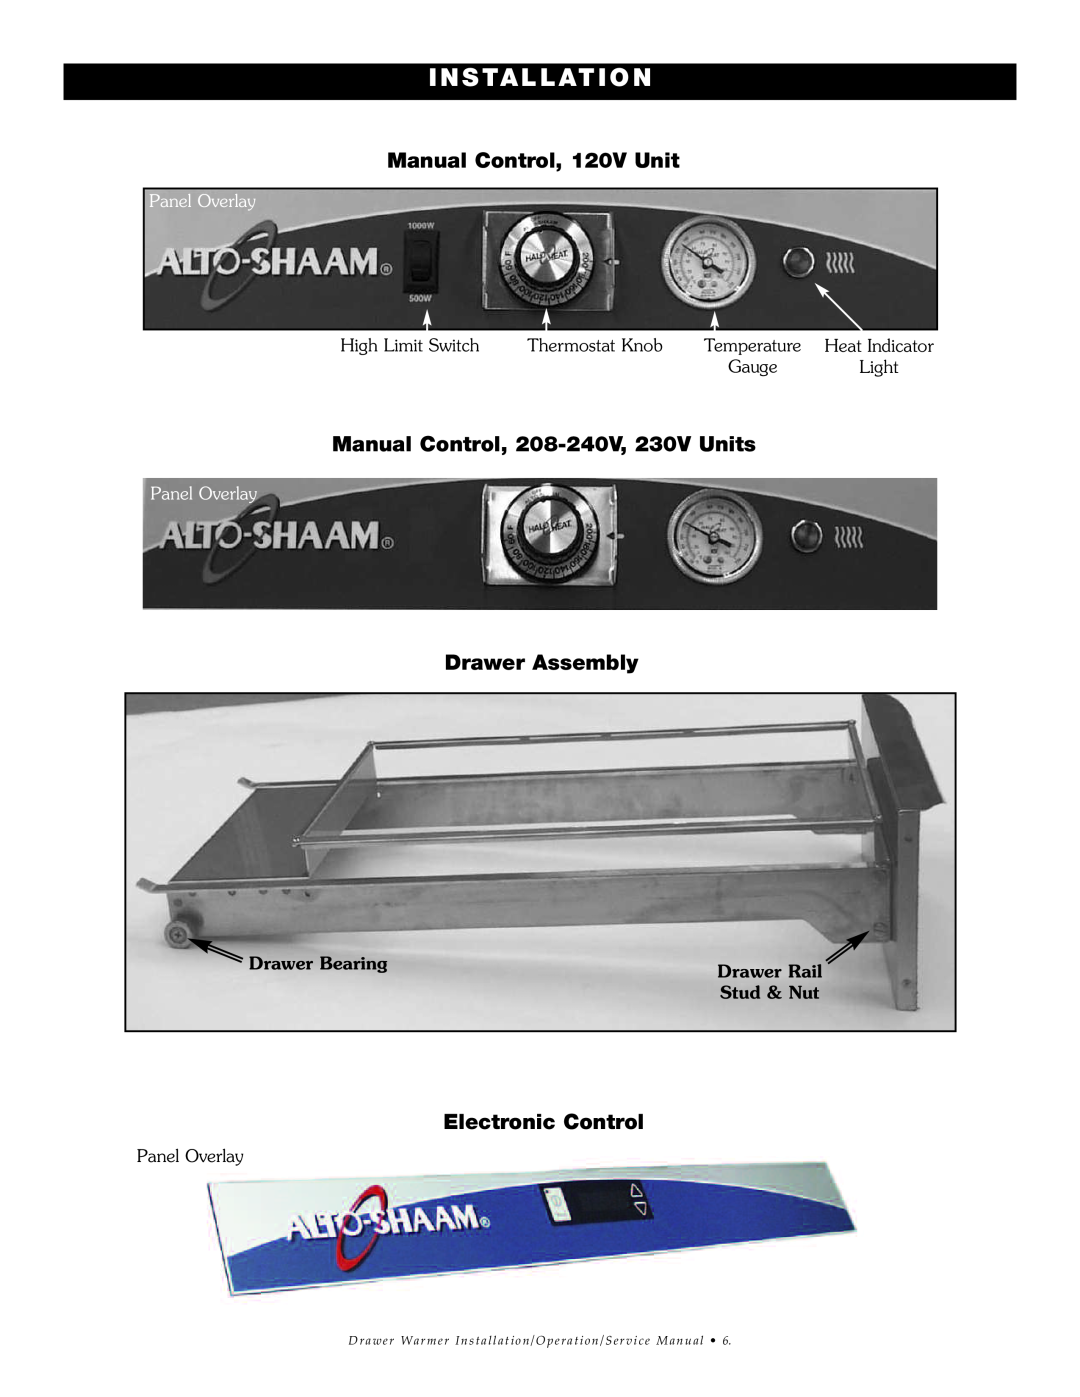 Alto-Shaam 2DN, 3DN Manual Control, 120V Unit, Manual Control, 208-240V,230V Units, Drawer Assembly, Electronic Control 